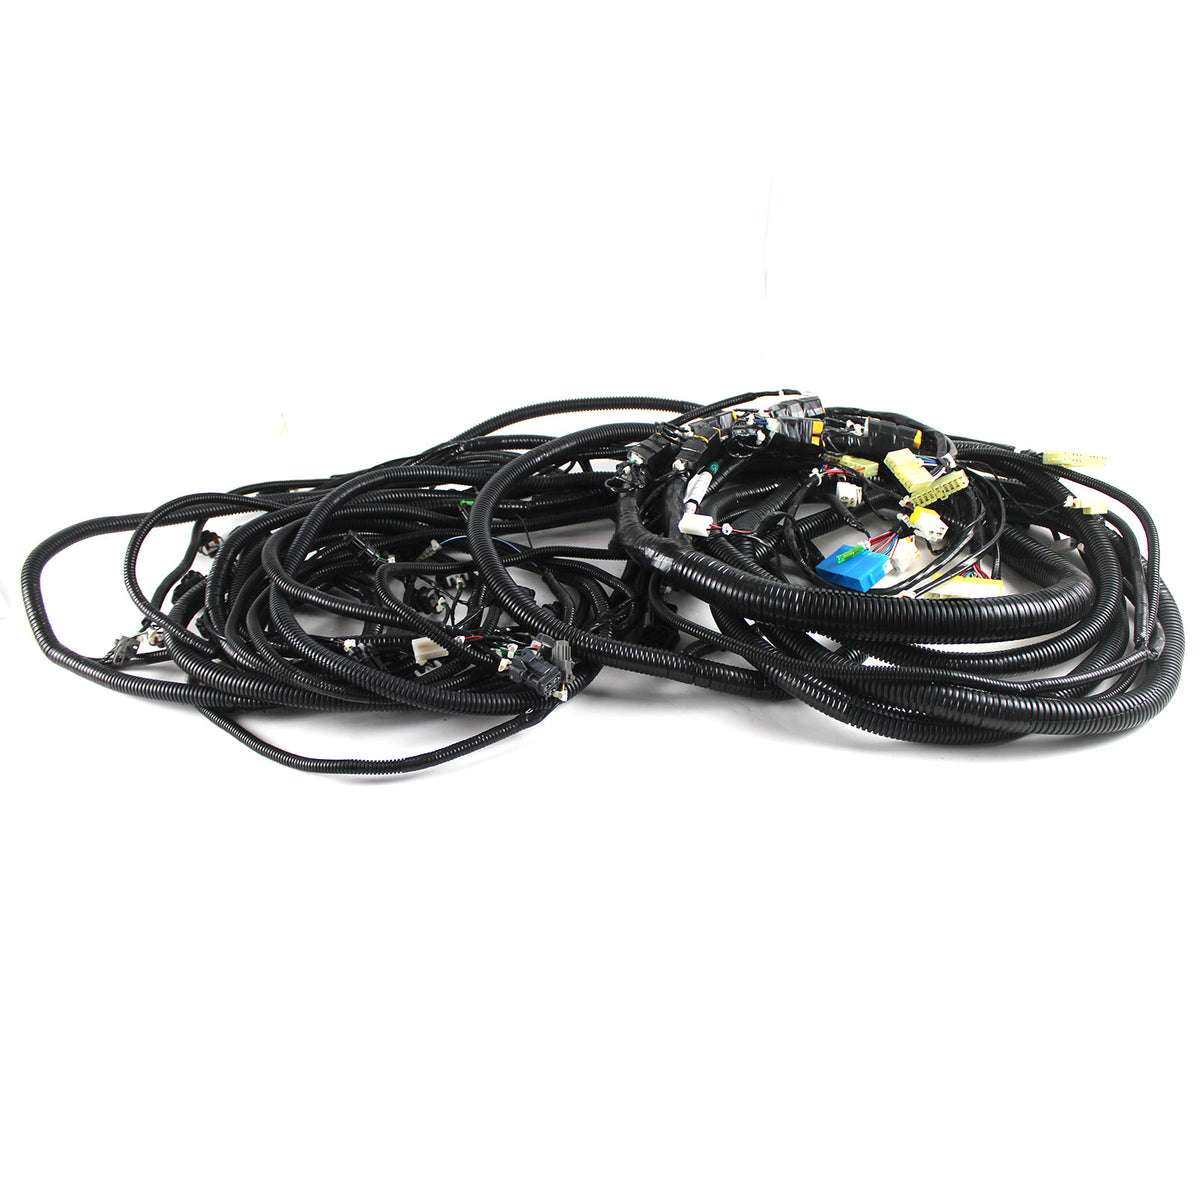 207-06-61231 Wiring Harness for Komatsu PC300-6 PC400LC-6